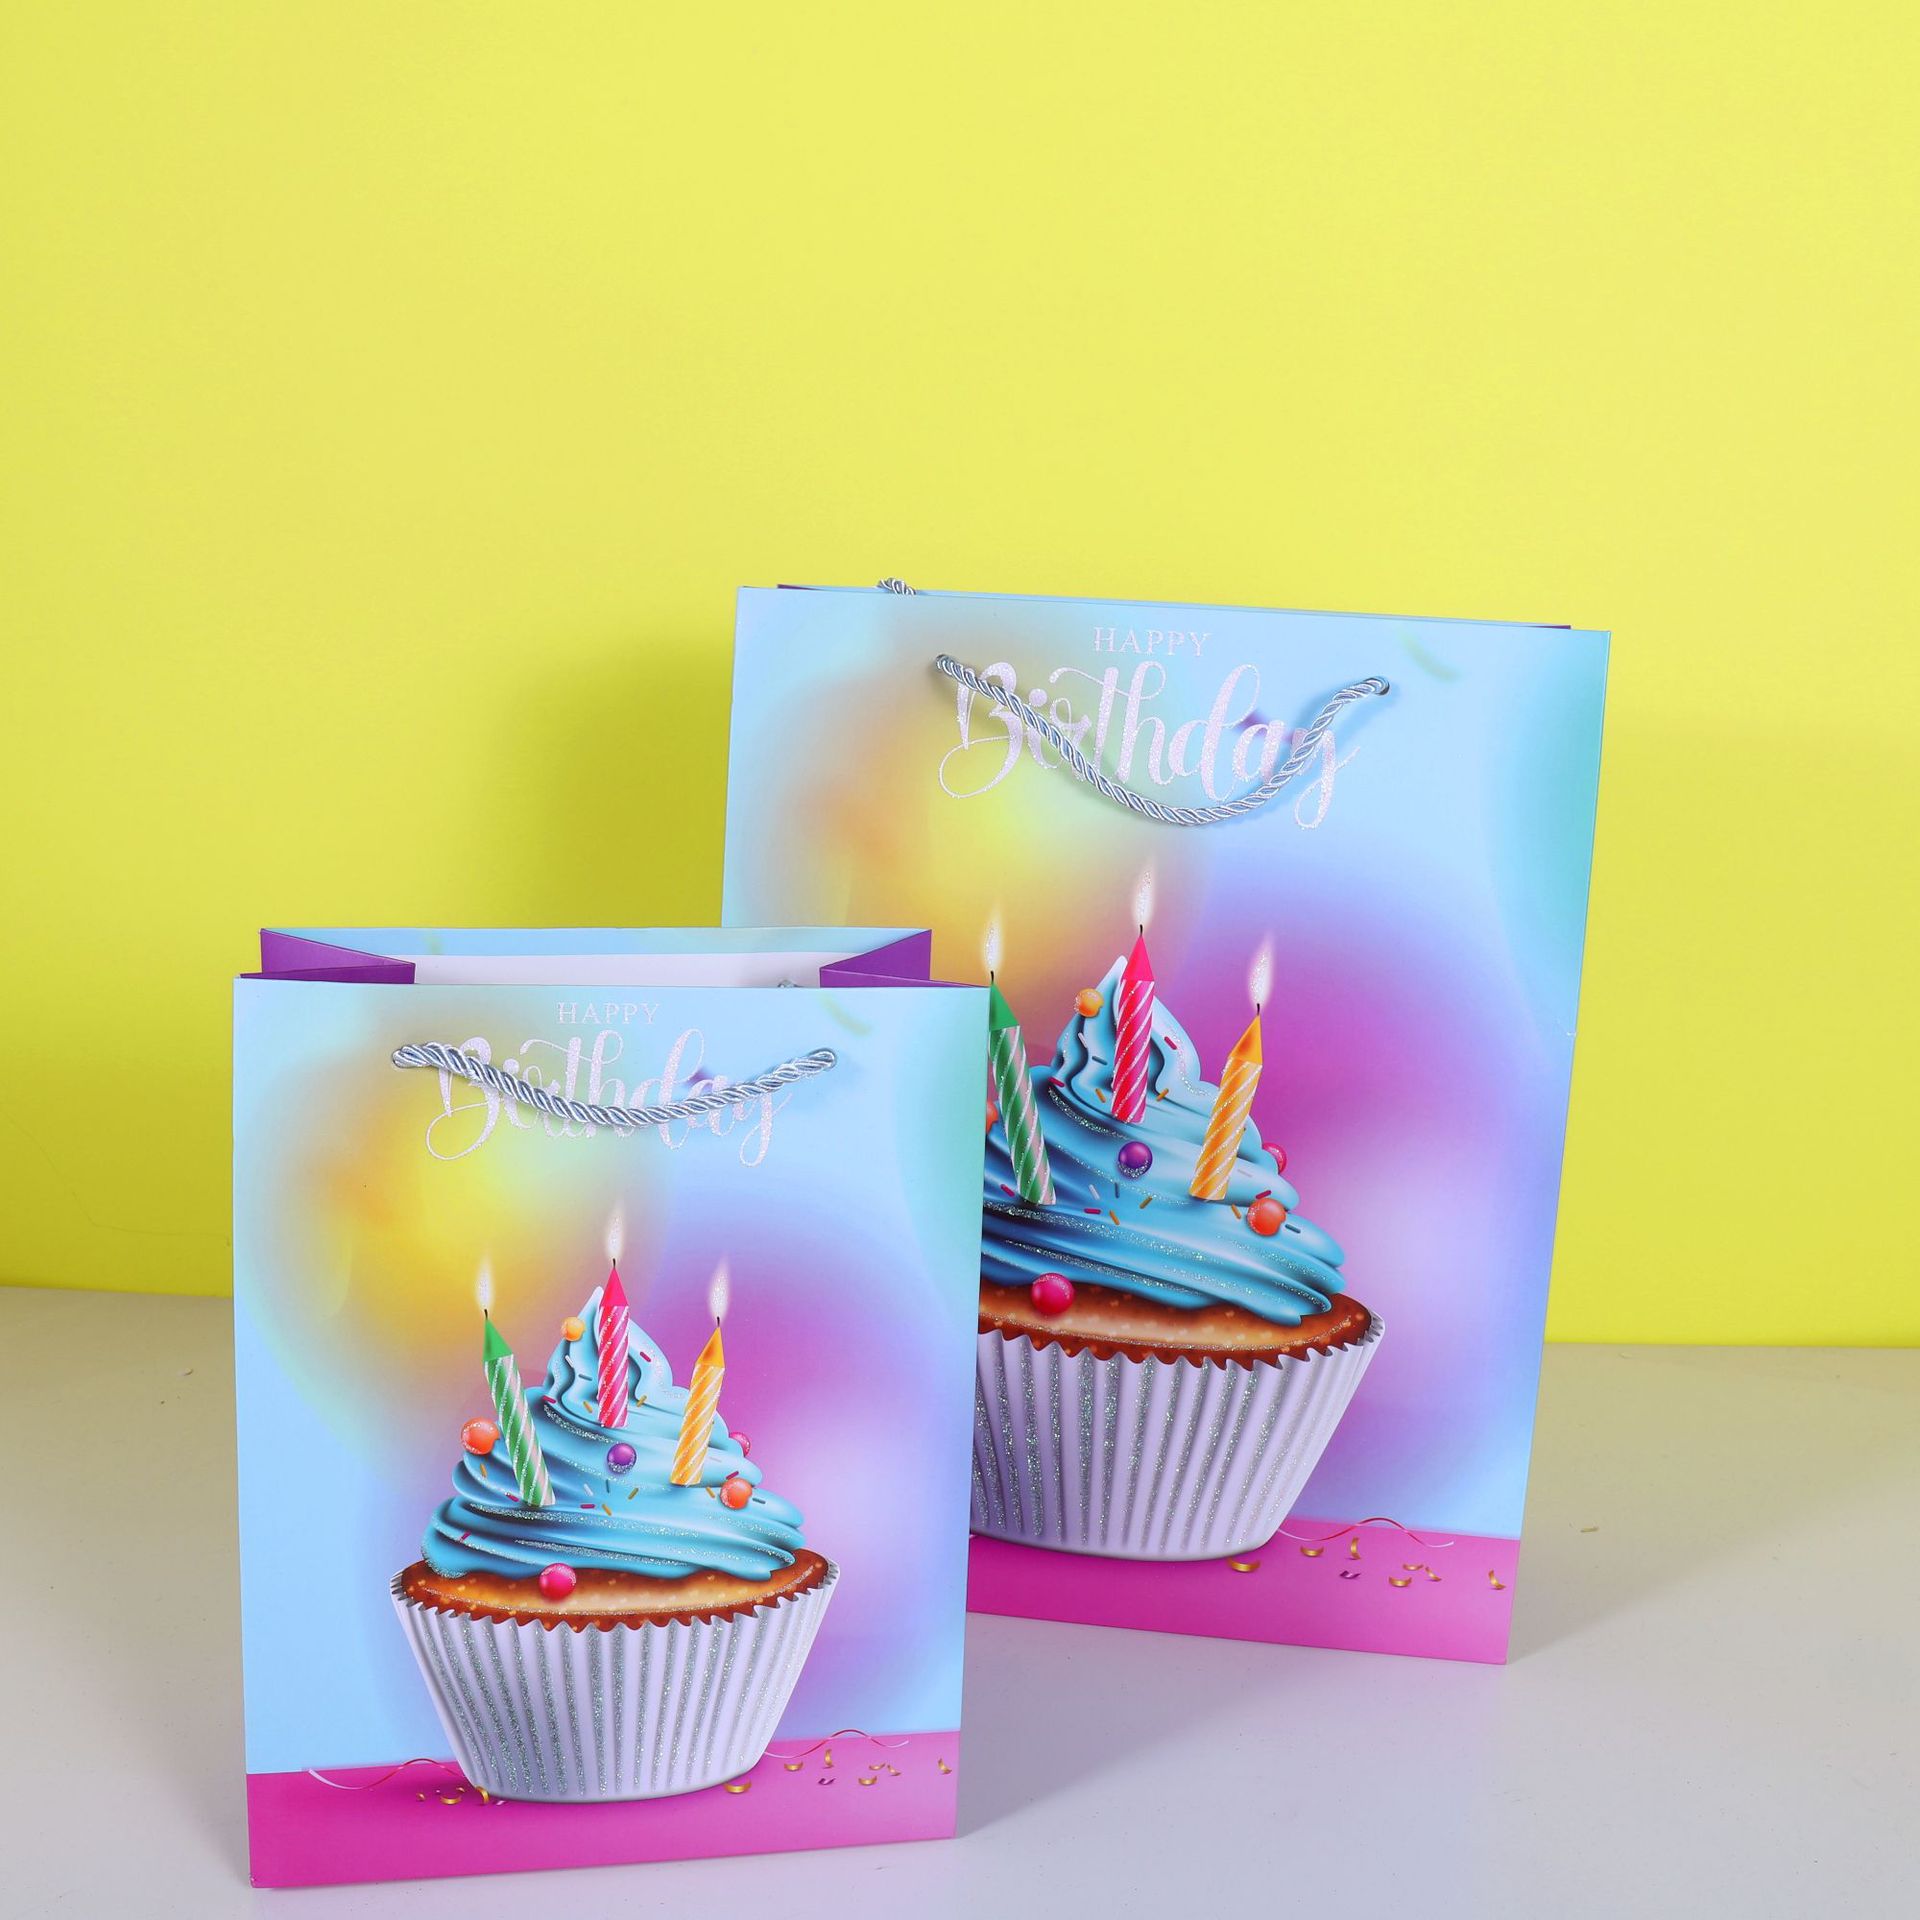 Yiwu Factory Dusting Powder White Card Birthday Gift Portable Paper Bag in Stock Wholesale Balloon Cake Birthday Celebration